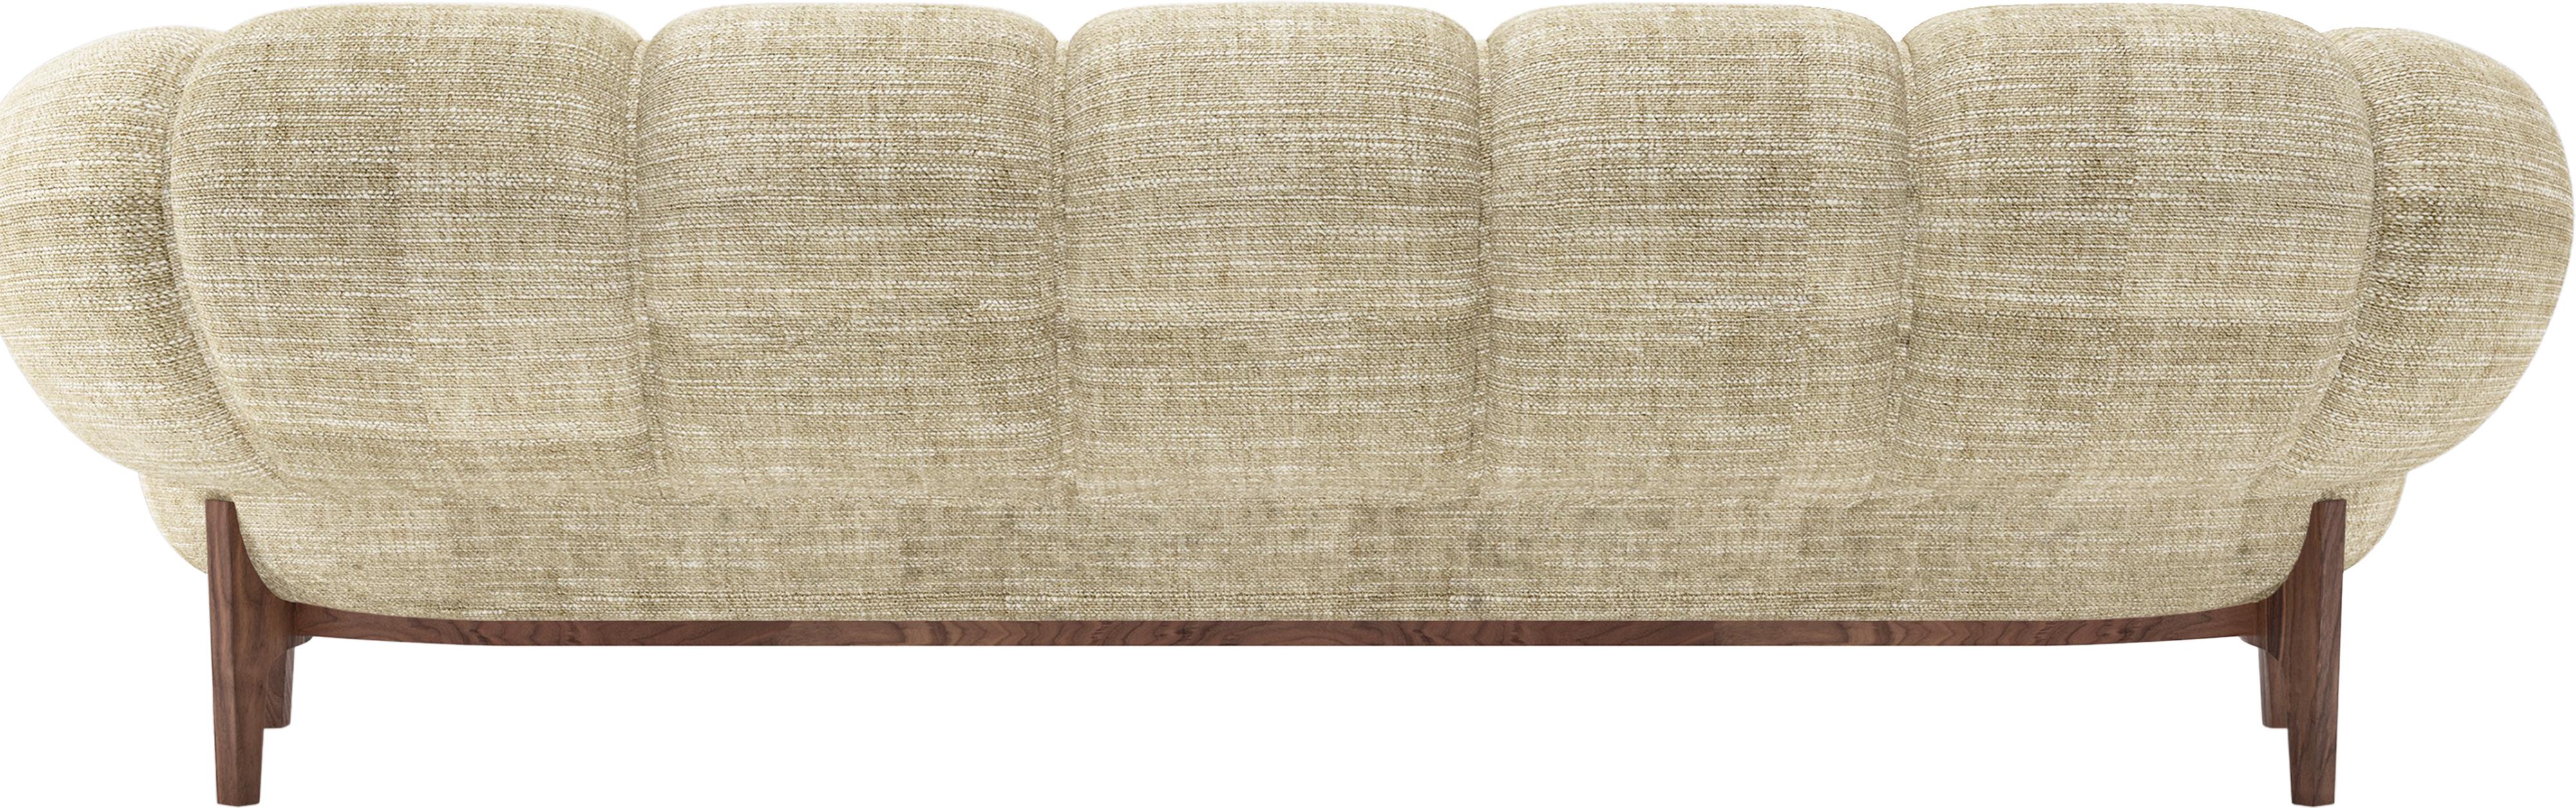 Fabric 'Croissant' Sofa by Illum Wikkelsø for GUBI with Oak Legs For Sale 6